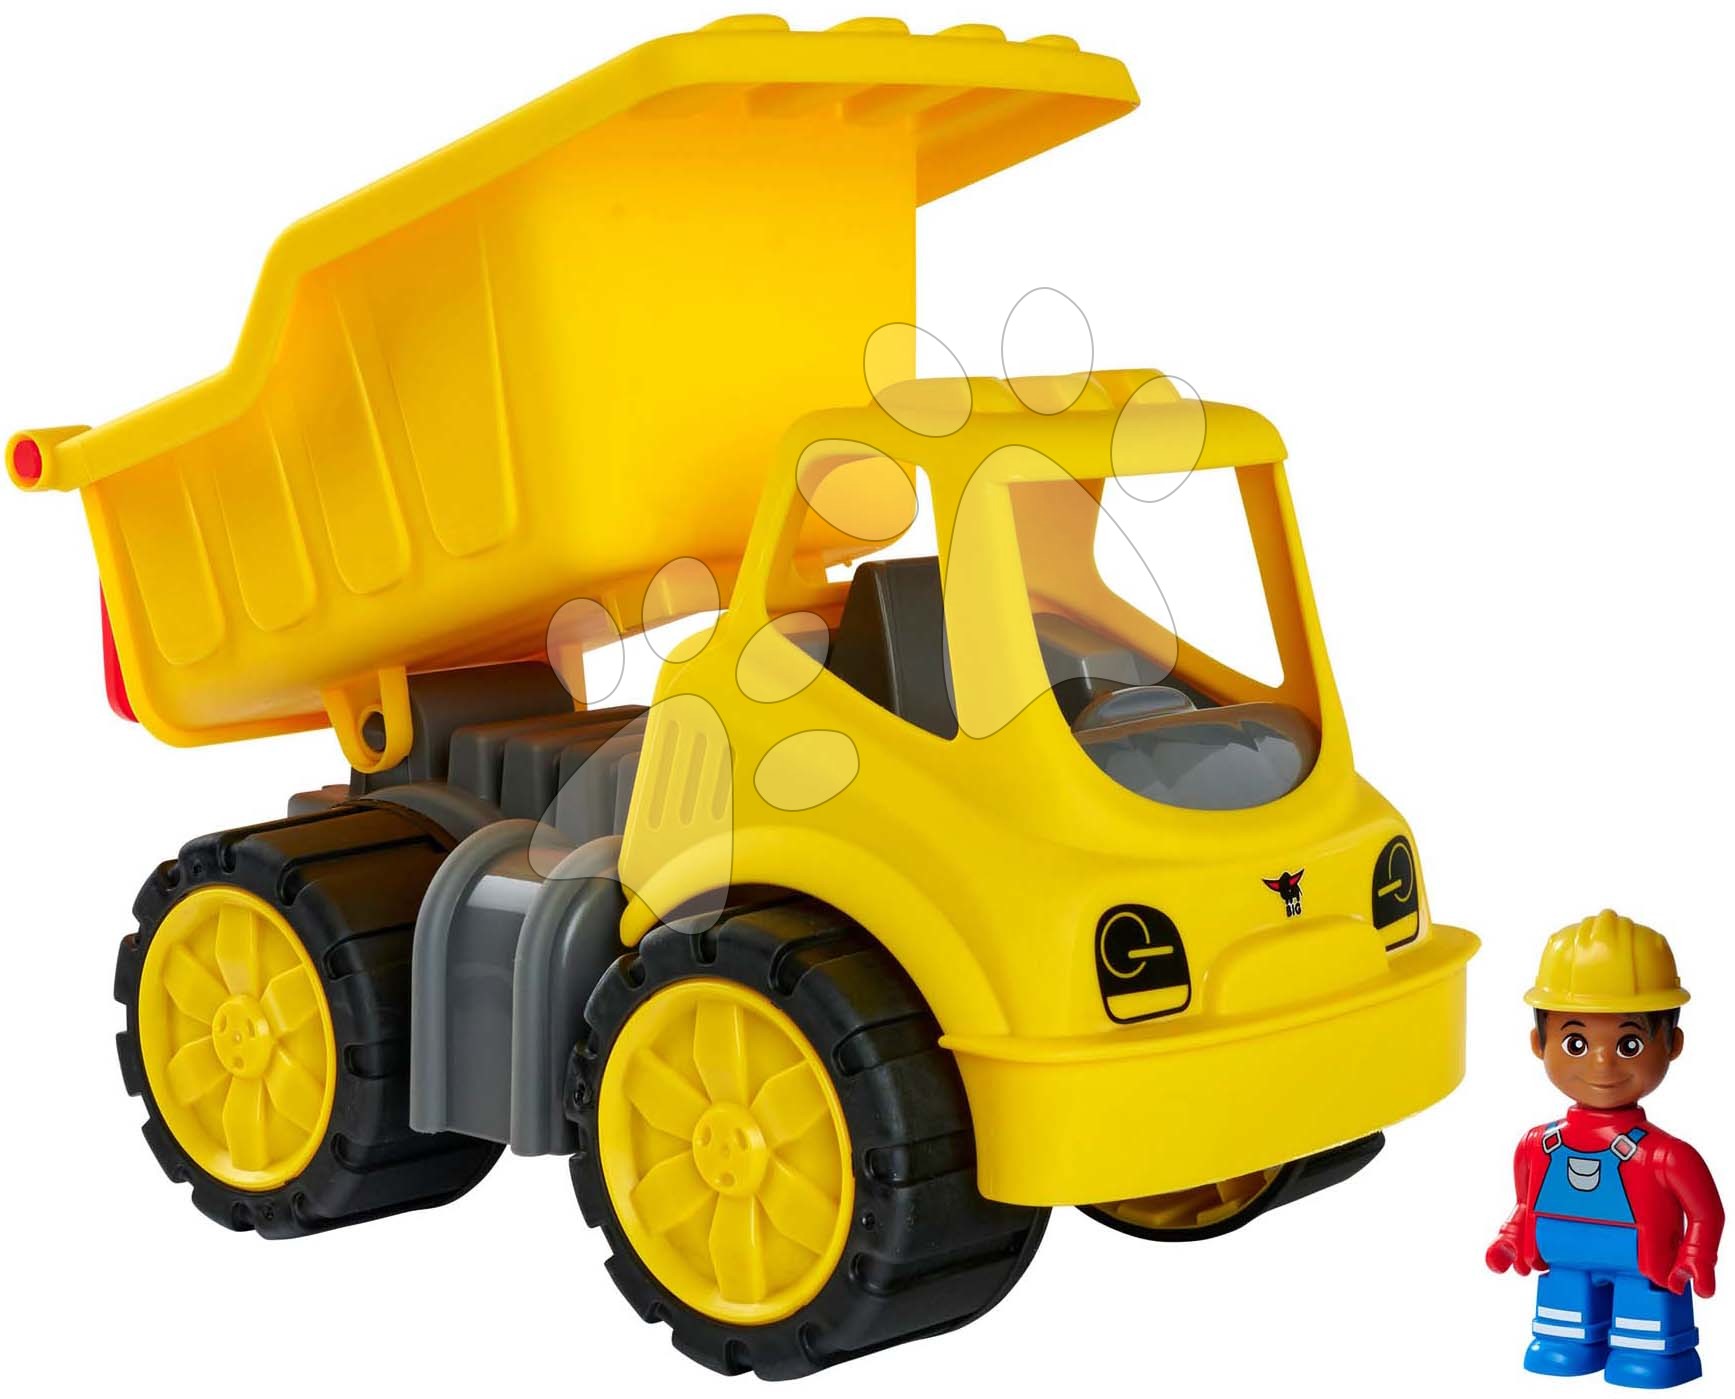 Teherautók - Teherautó Power Worker Dumper+Figurine BIG munkagép 33 cm gumikerekekkel 2 évtől